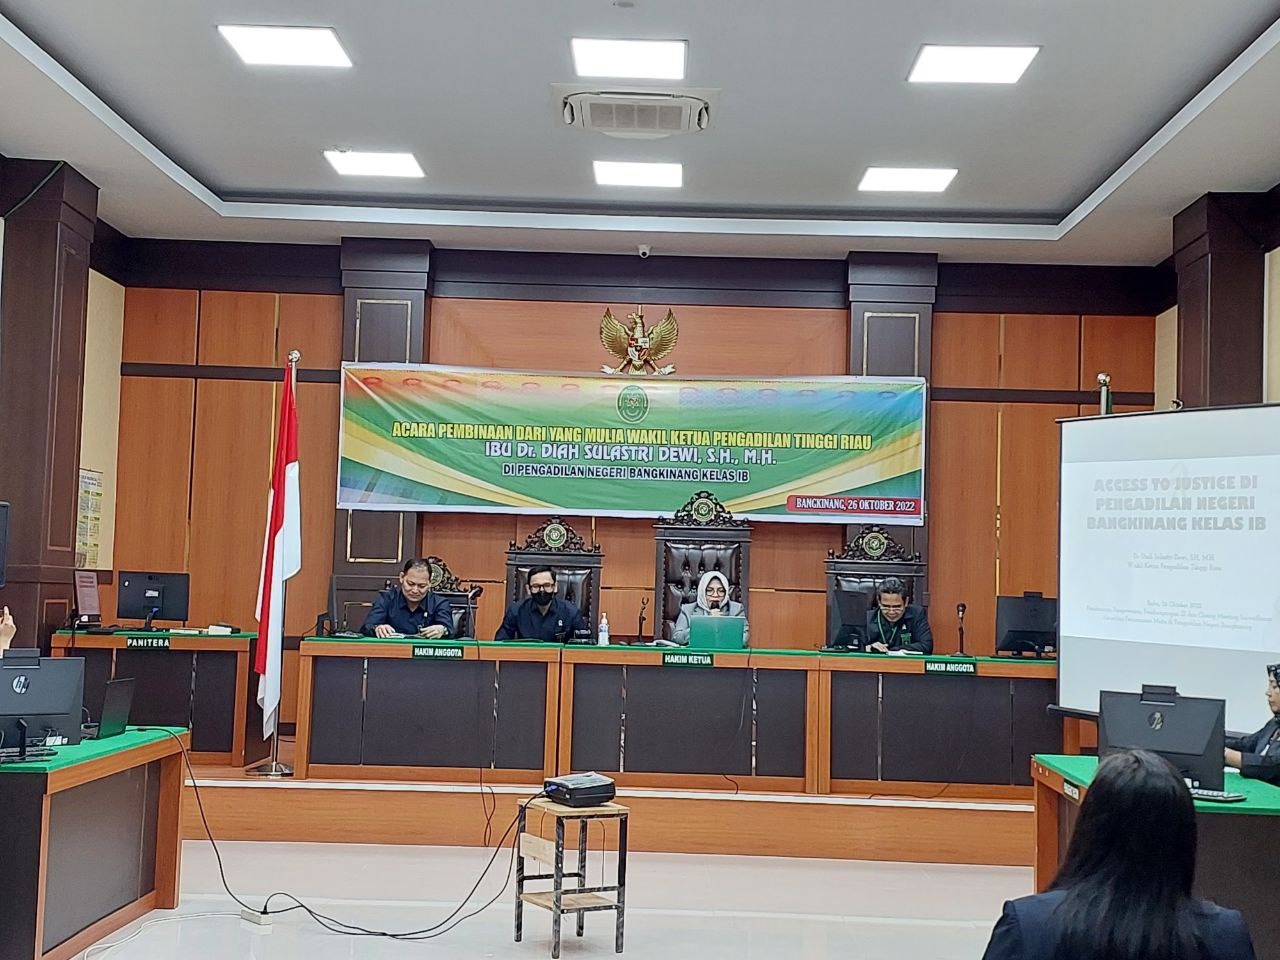 Acara Pembinaan Dari Yang Mulia Wakil Ketua Pengadilan Tinggi Riau Ibu Dr. Diah Sulastri Dewi, S.H., M.H di Pengadilan Negeri Bangkinang